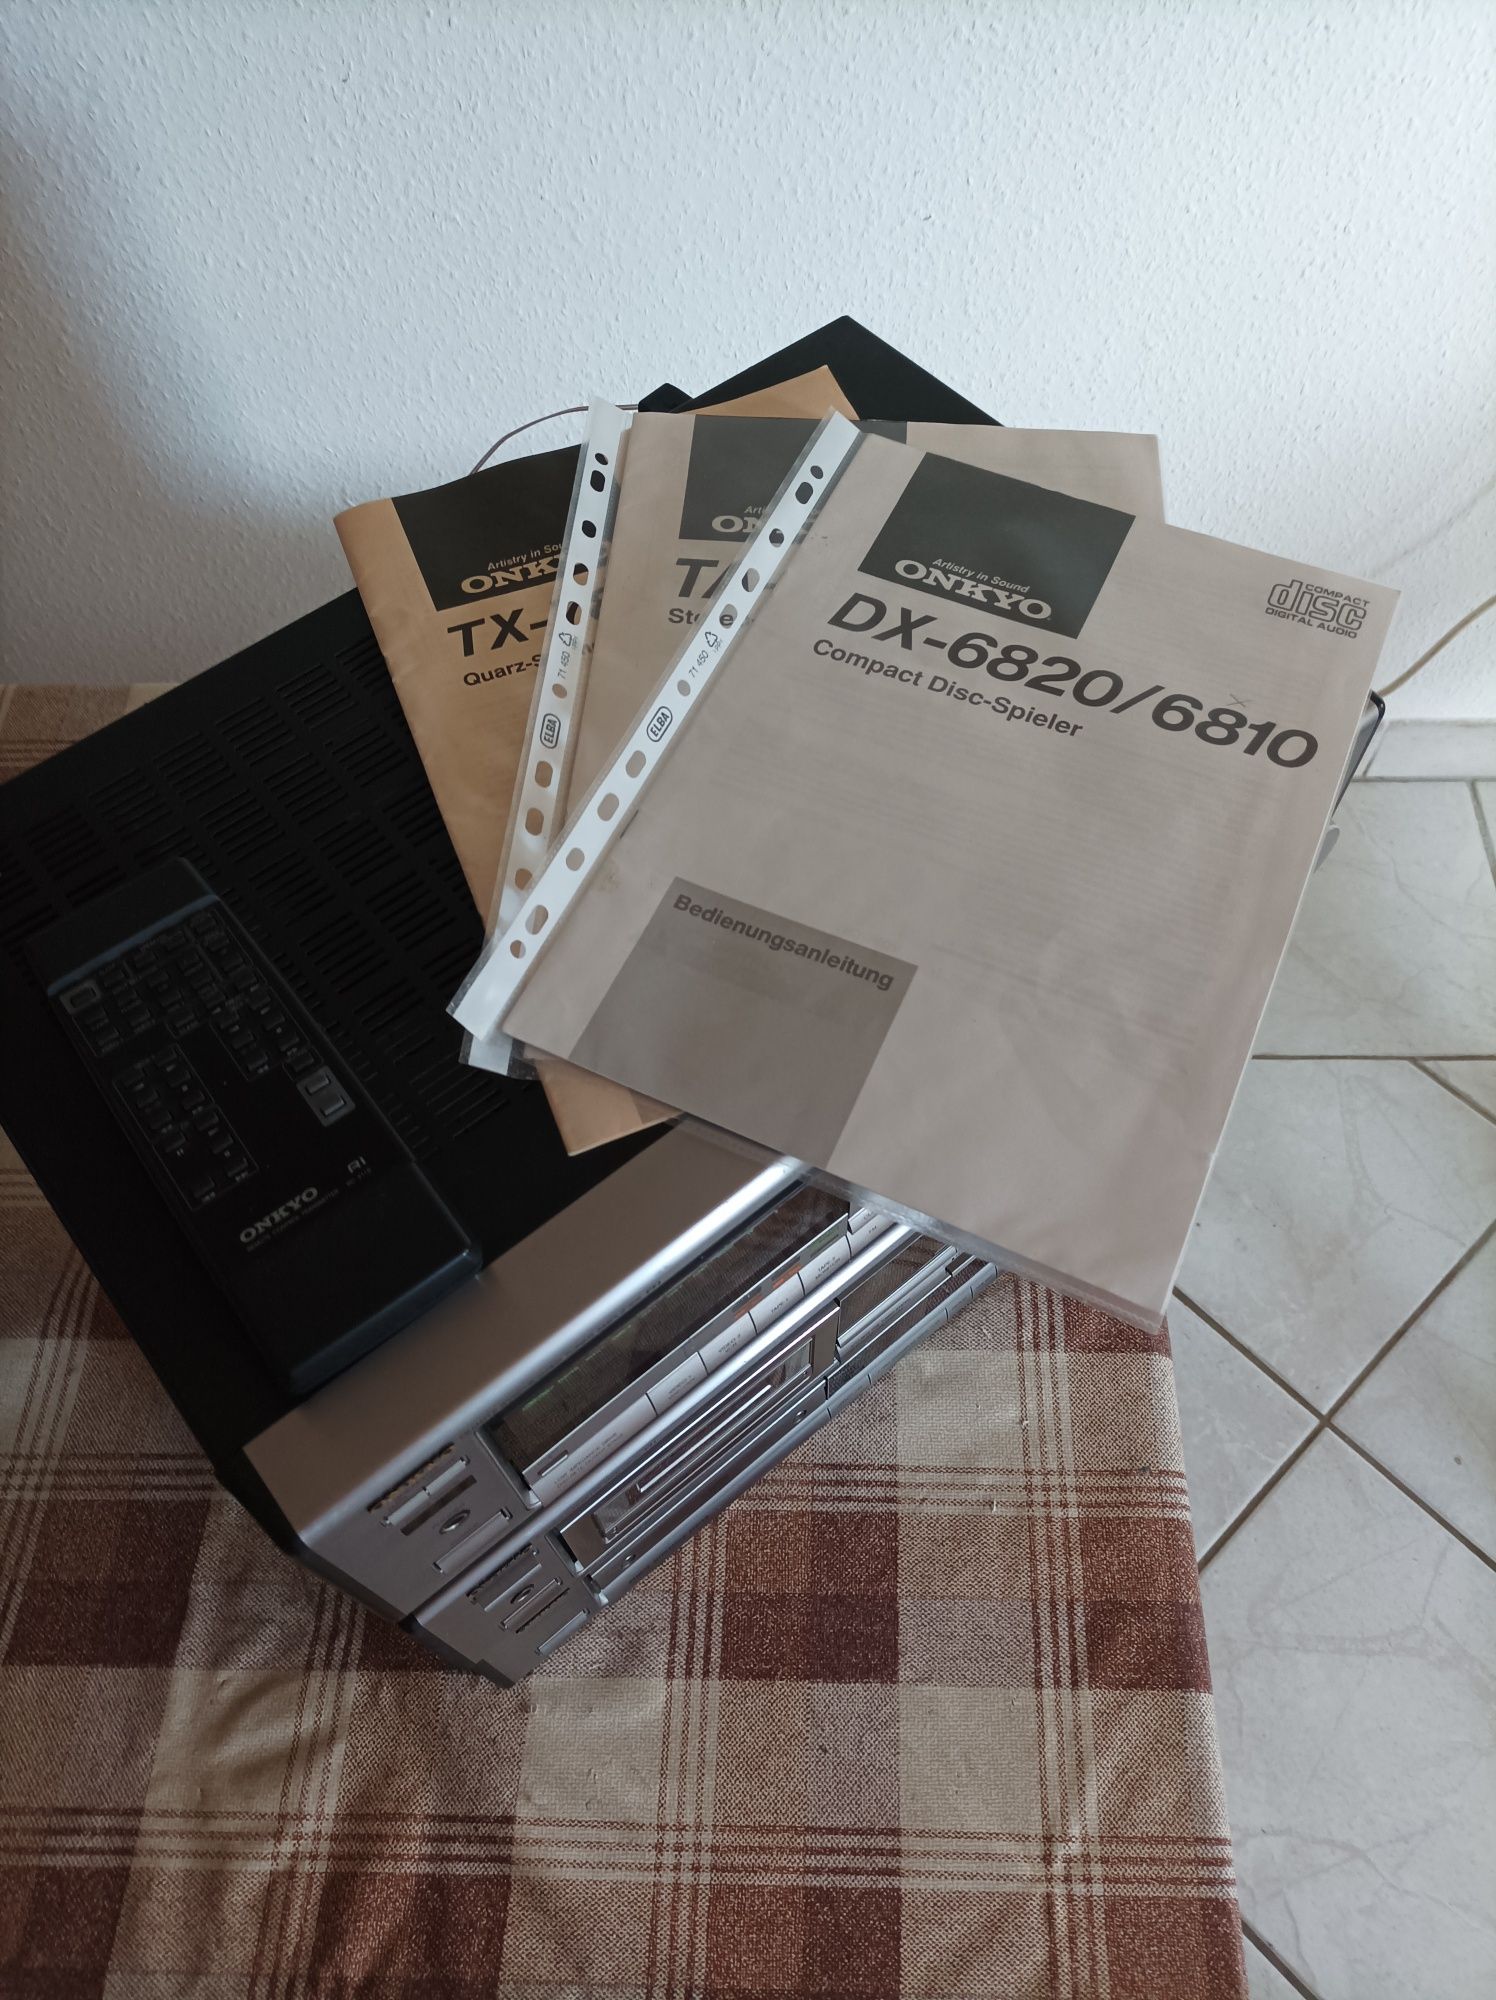 Wieża Onkyo TX7830,TA2820,DX6810 , pilot, papiery, vintage, audiofilsk